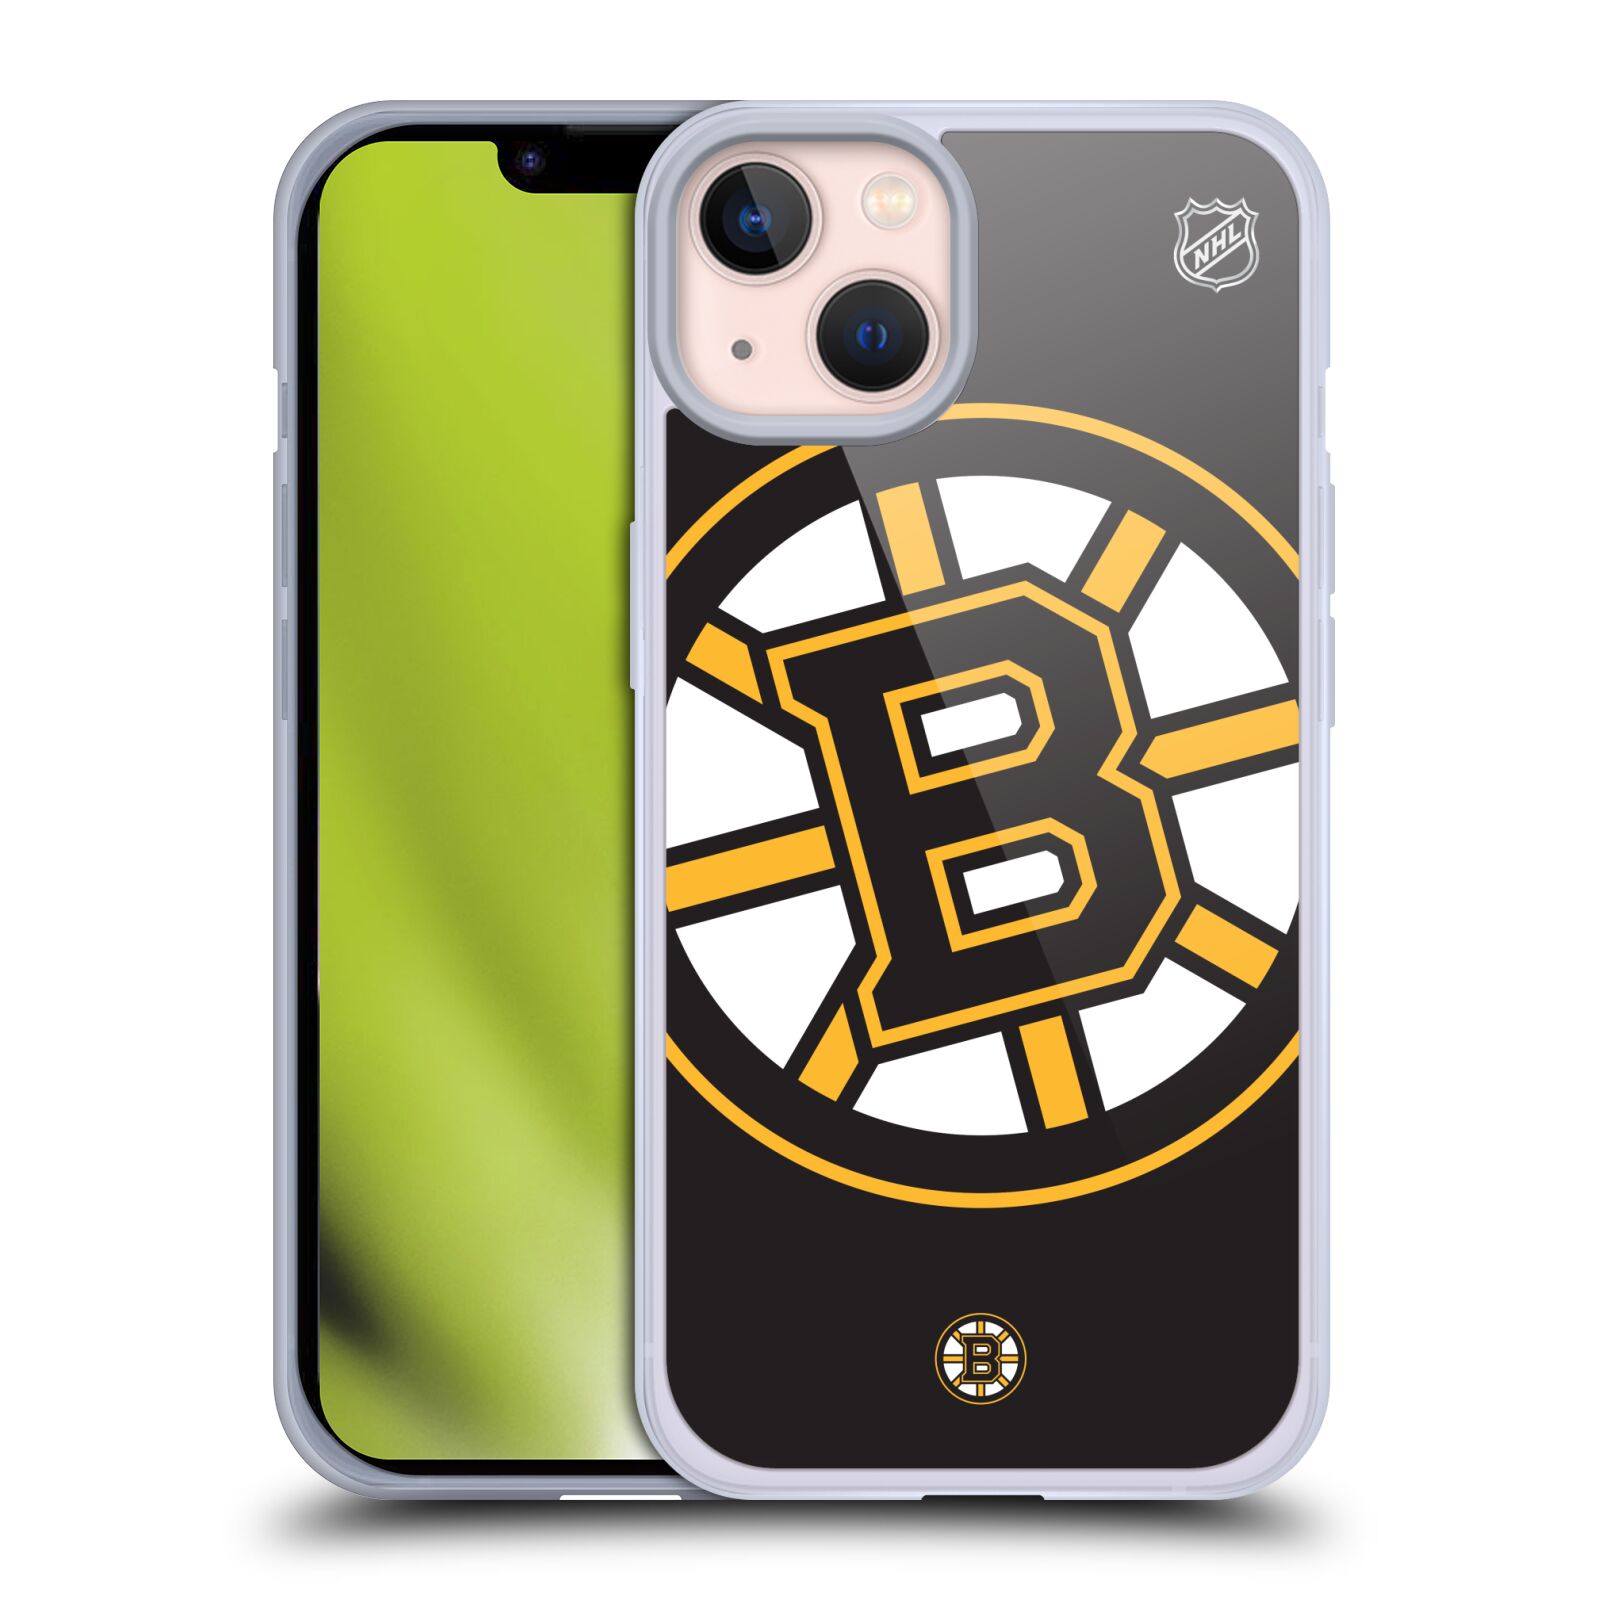 Silikonové pouzdro na mobil Apple iPhone 13 - NHL - Velké logo Boston Bruins (Silikonový kryt, obal, pouzdro na mobilní telefon Apple iPhone 13 s licencovaným motivem NHL - Velké logo Boston Bruins)